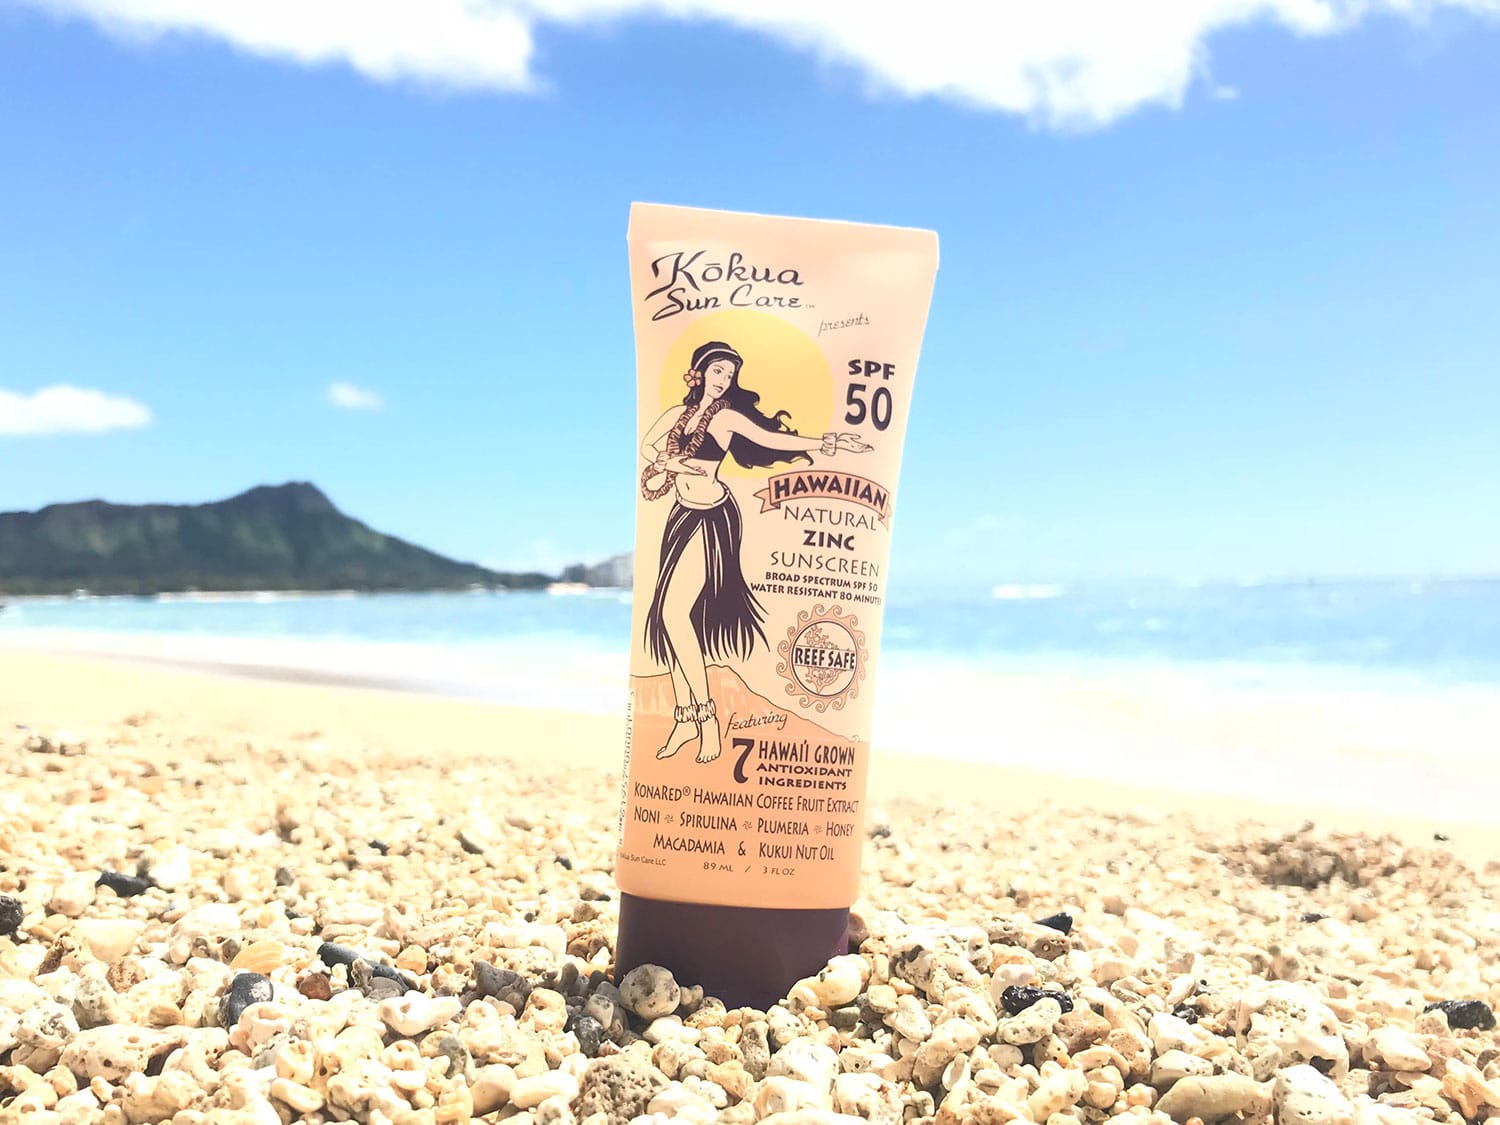 A bottle of Kōkua Sun Care Hawaiian Natural Zinc Sunscreen on the beach.